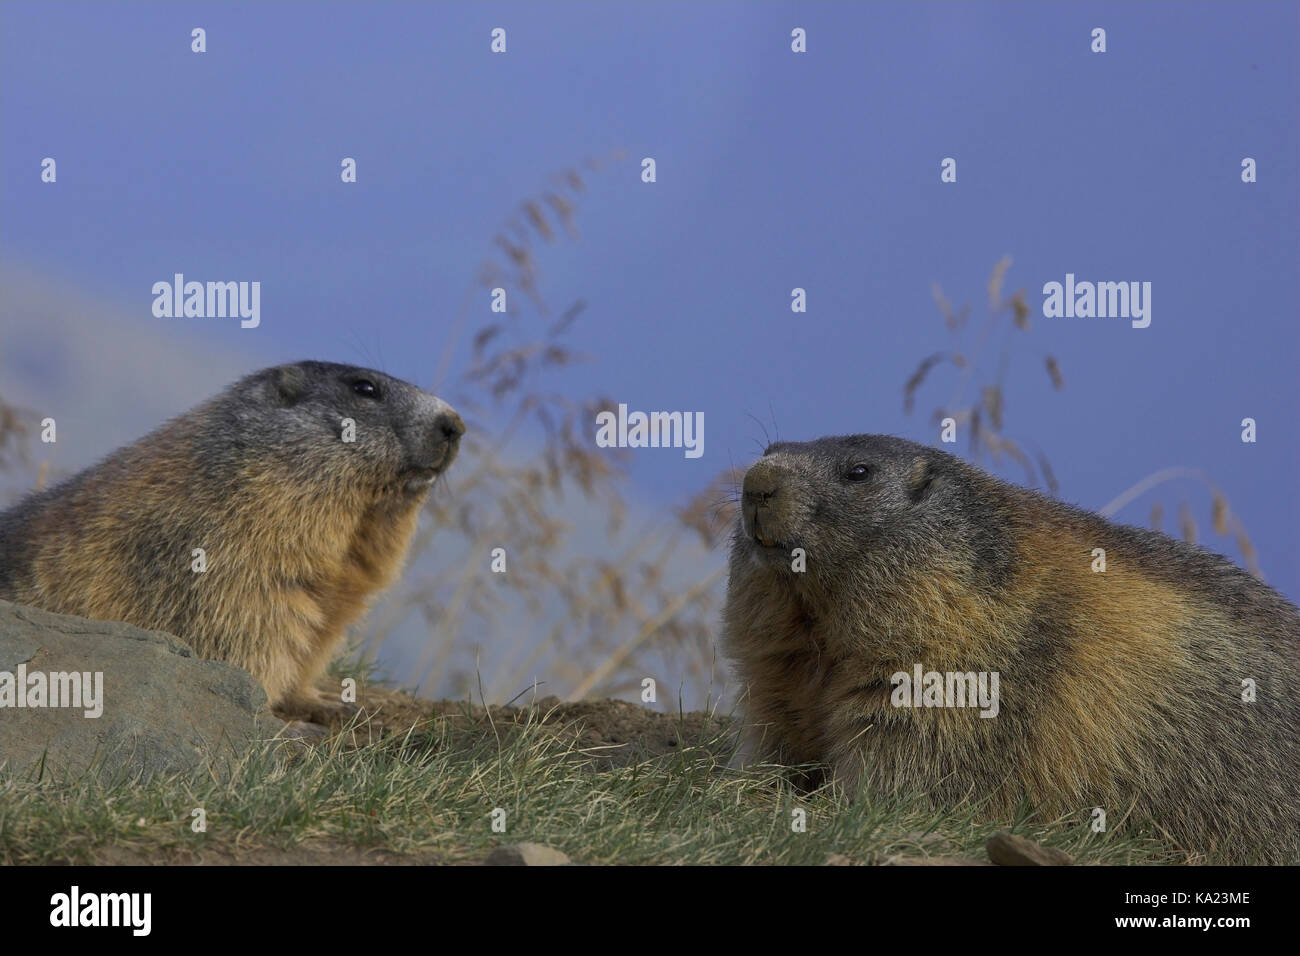 Groundhog, alpine marmot, Marmota marmota, Murmeltier / Alpine marmot / Marmota marmota Stock Photo